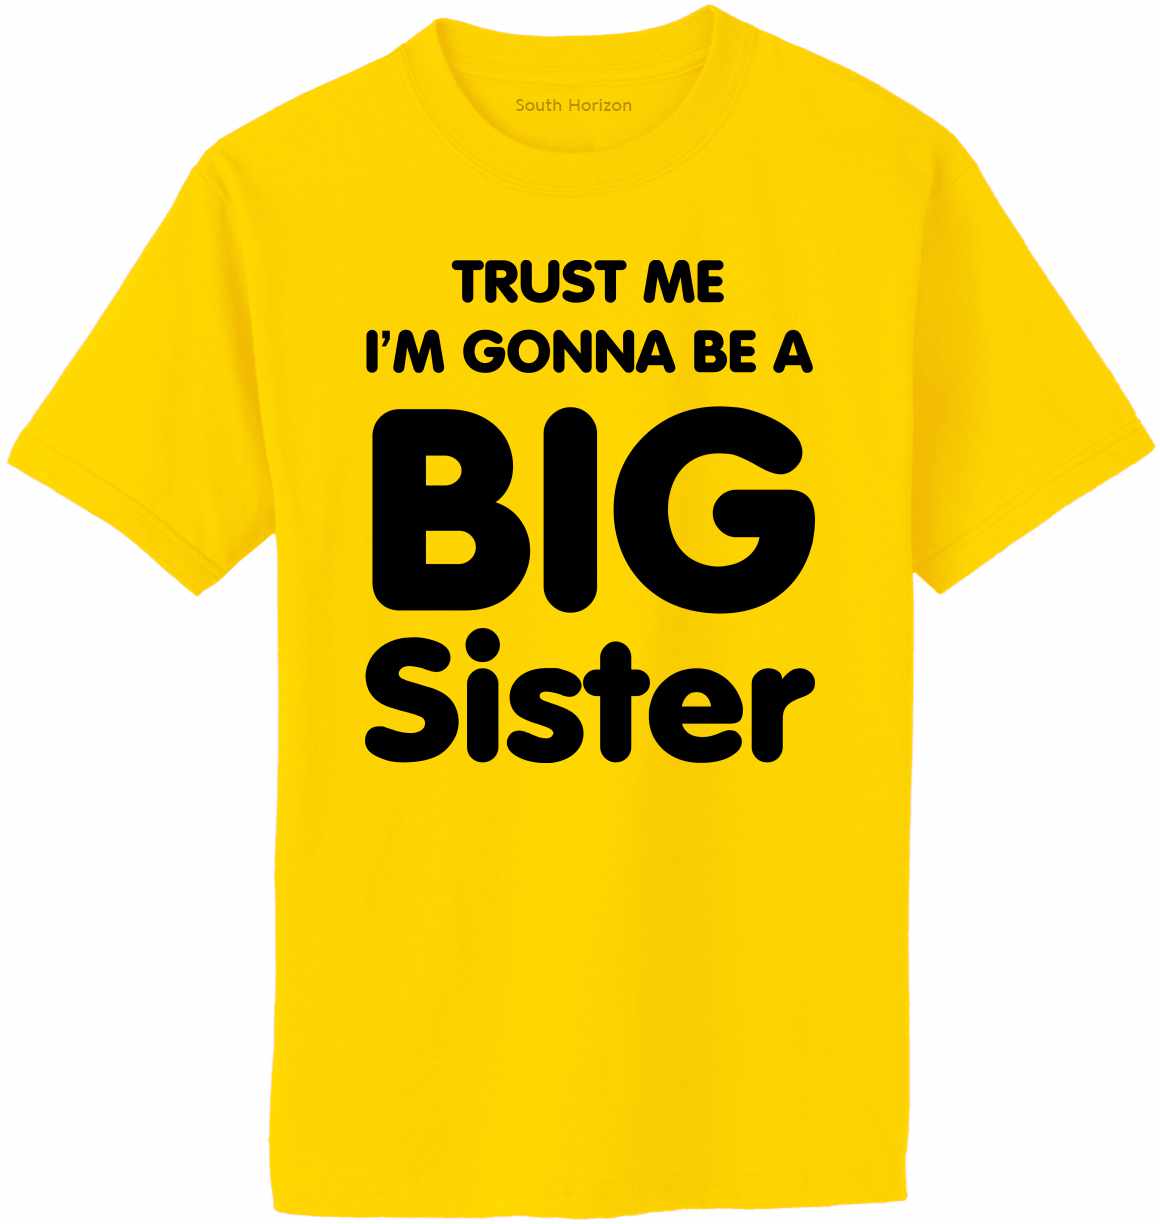 Trust Me I'm Gonna be a Big Sister Adult T-Shirt (#811-1)